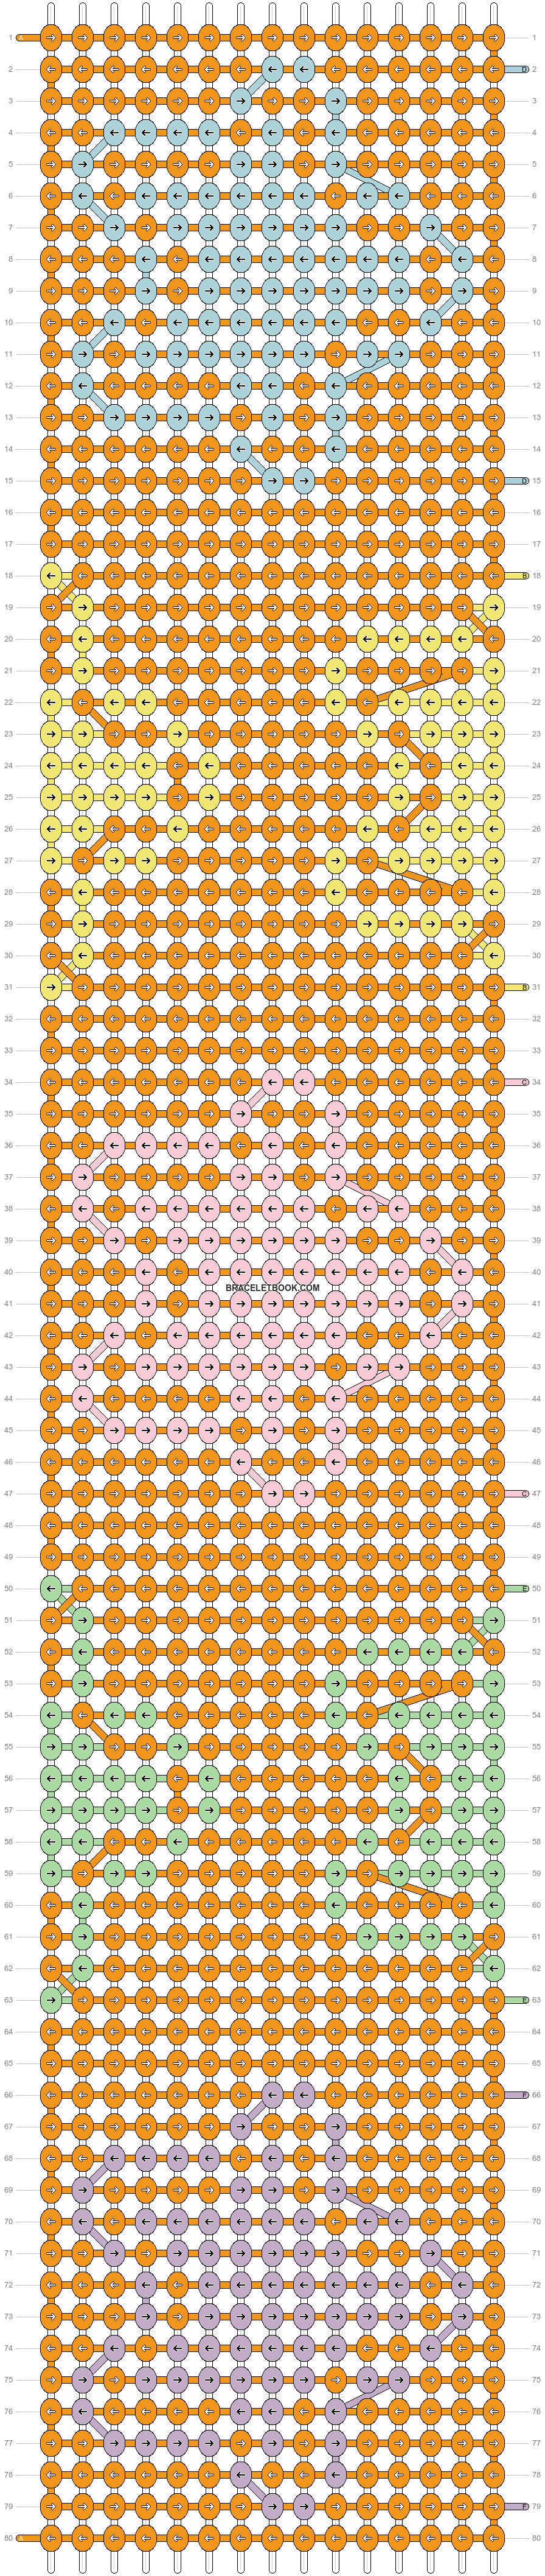 Alpha pattern #39626 variation #61196 pattern